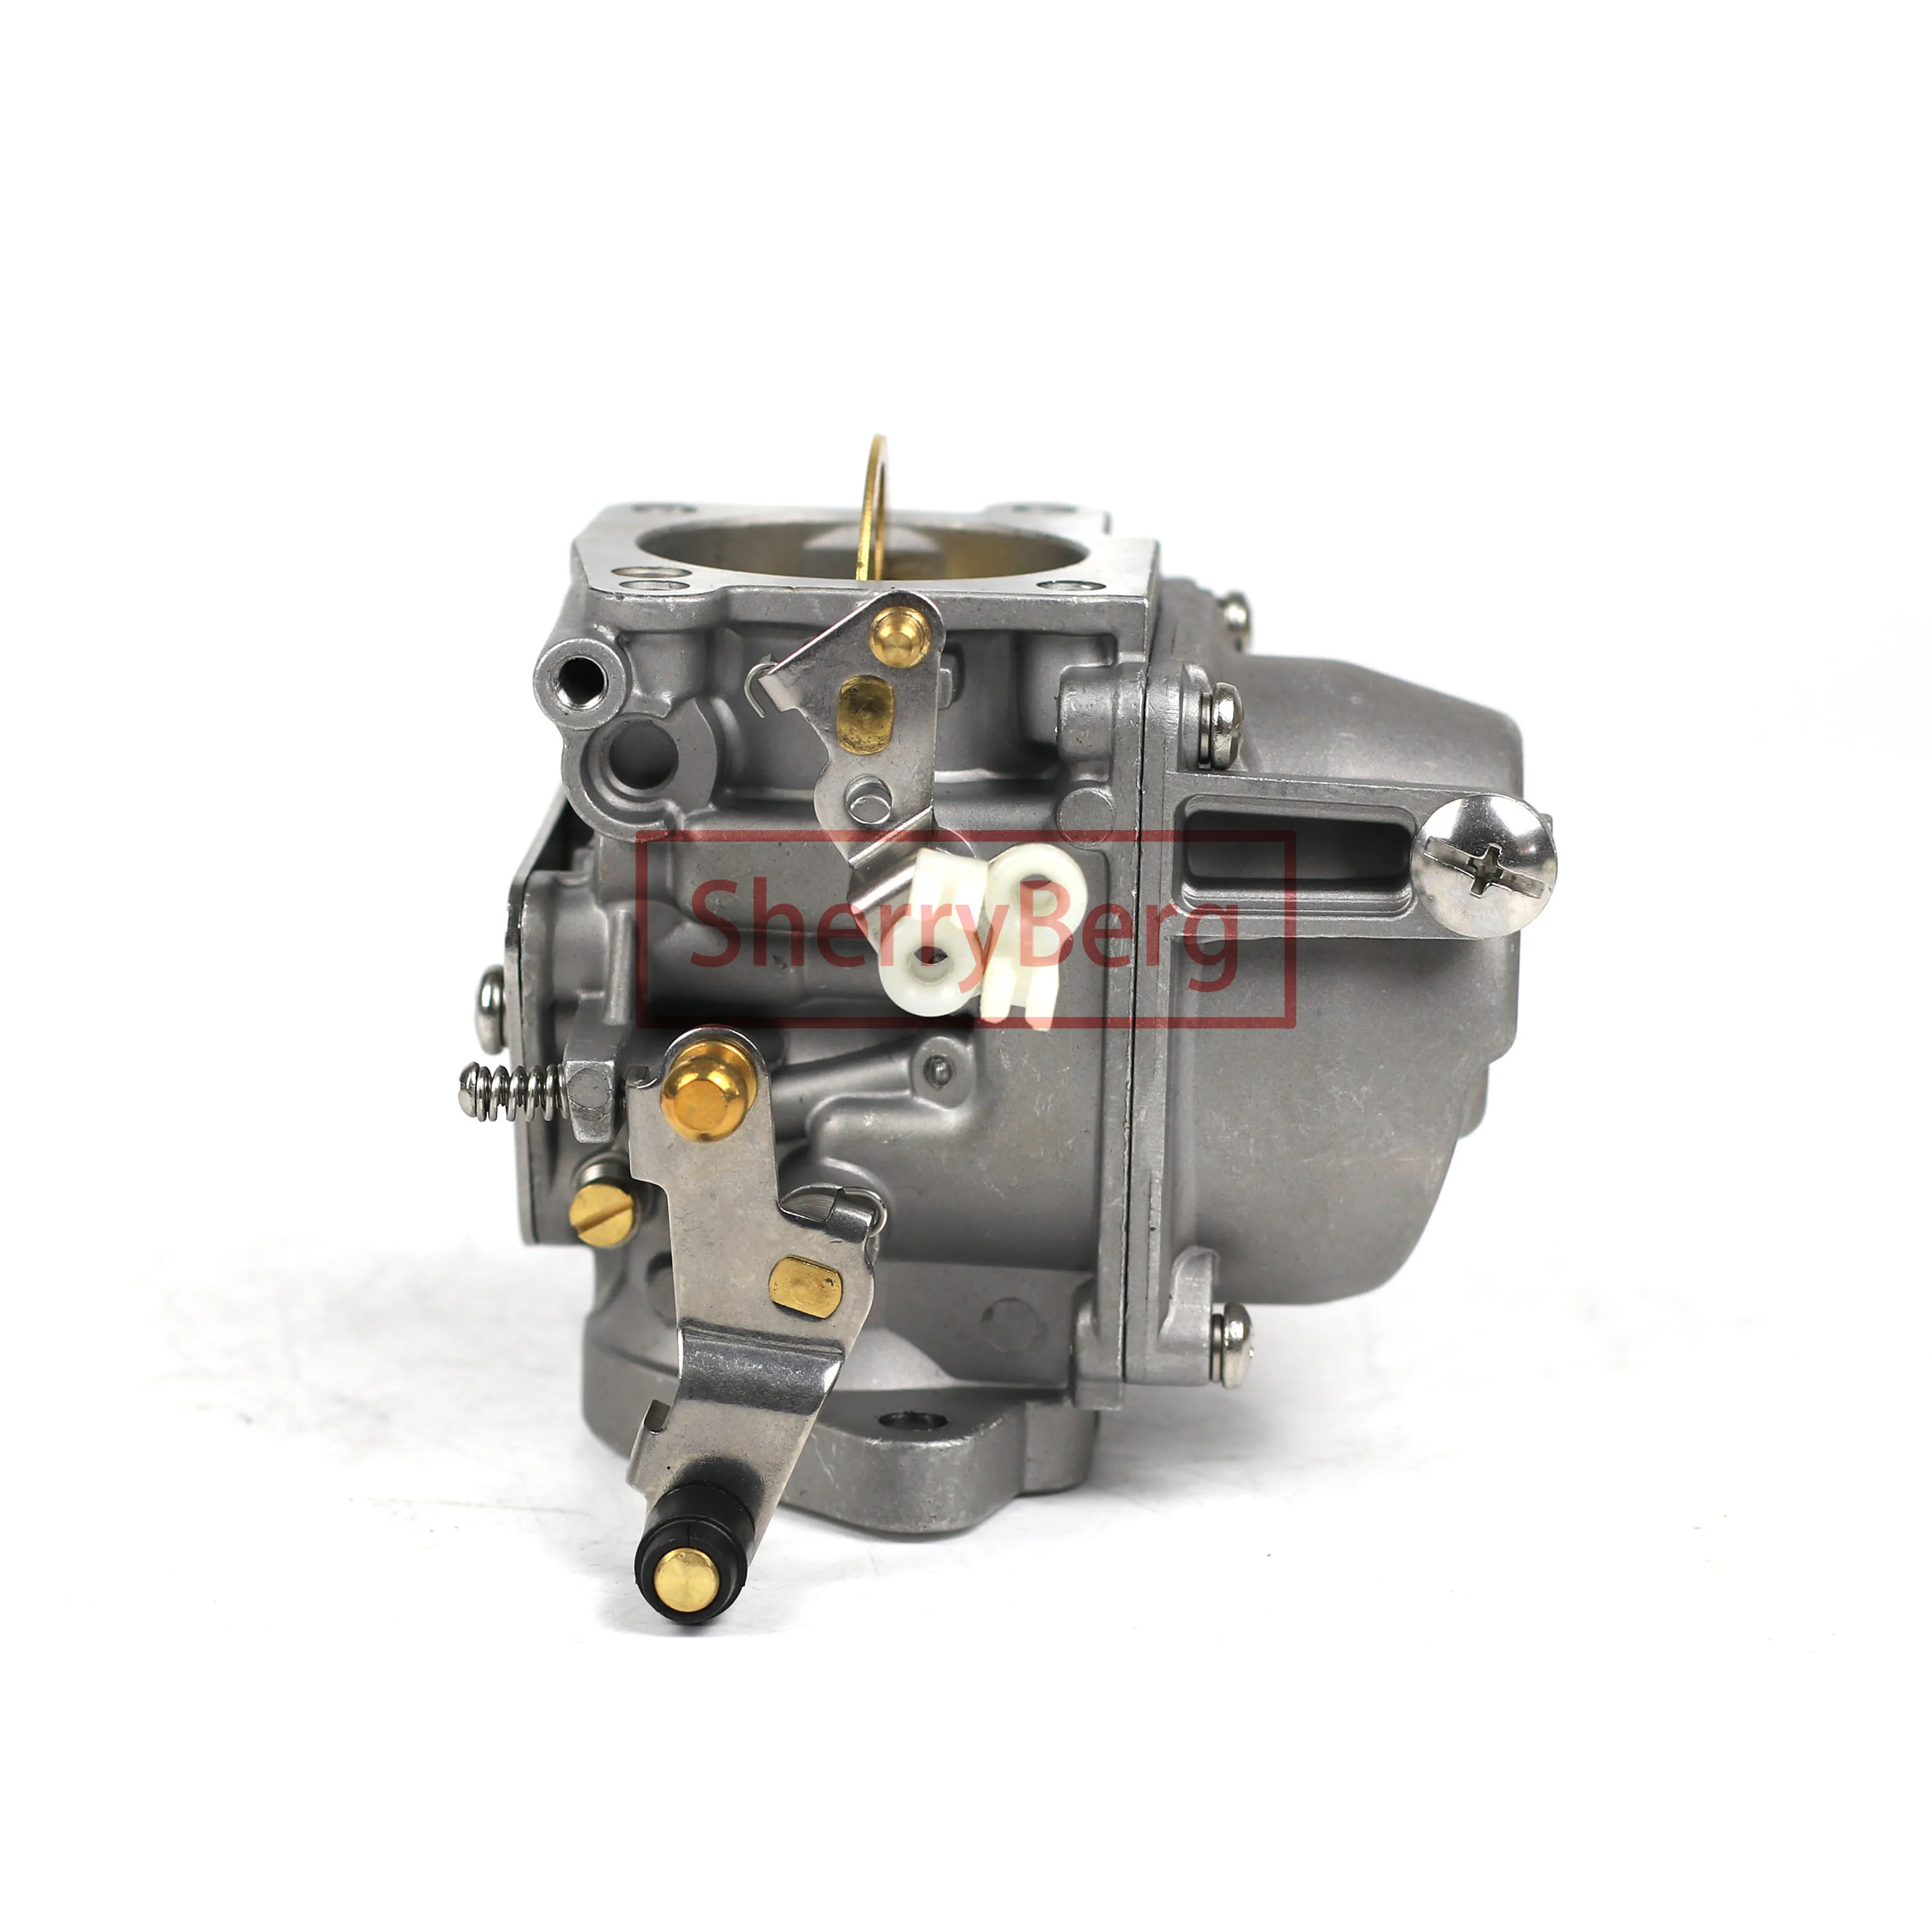 

SherryBerg Carb Carburador Carburettor Outboard OEM#688-14301-08-00 FOR YAMAHA CARBURETOR ASSY 1 #6881430108001992-1993 85HP